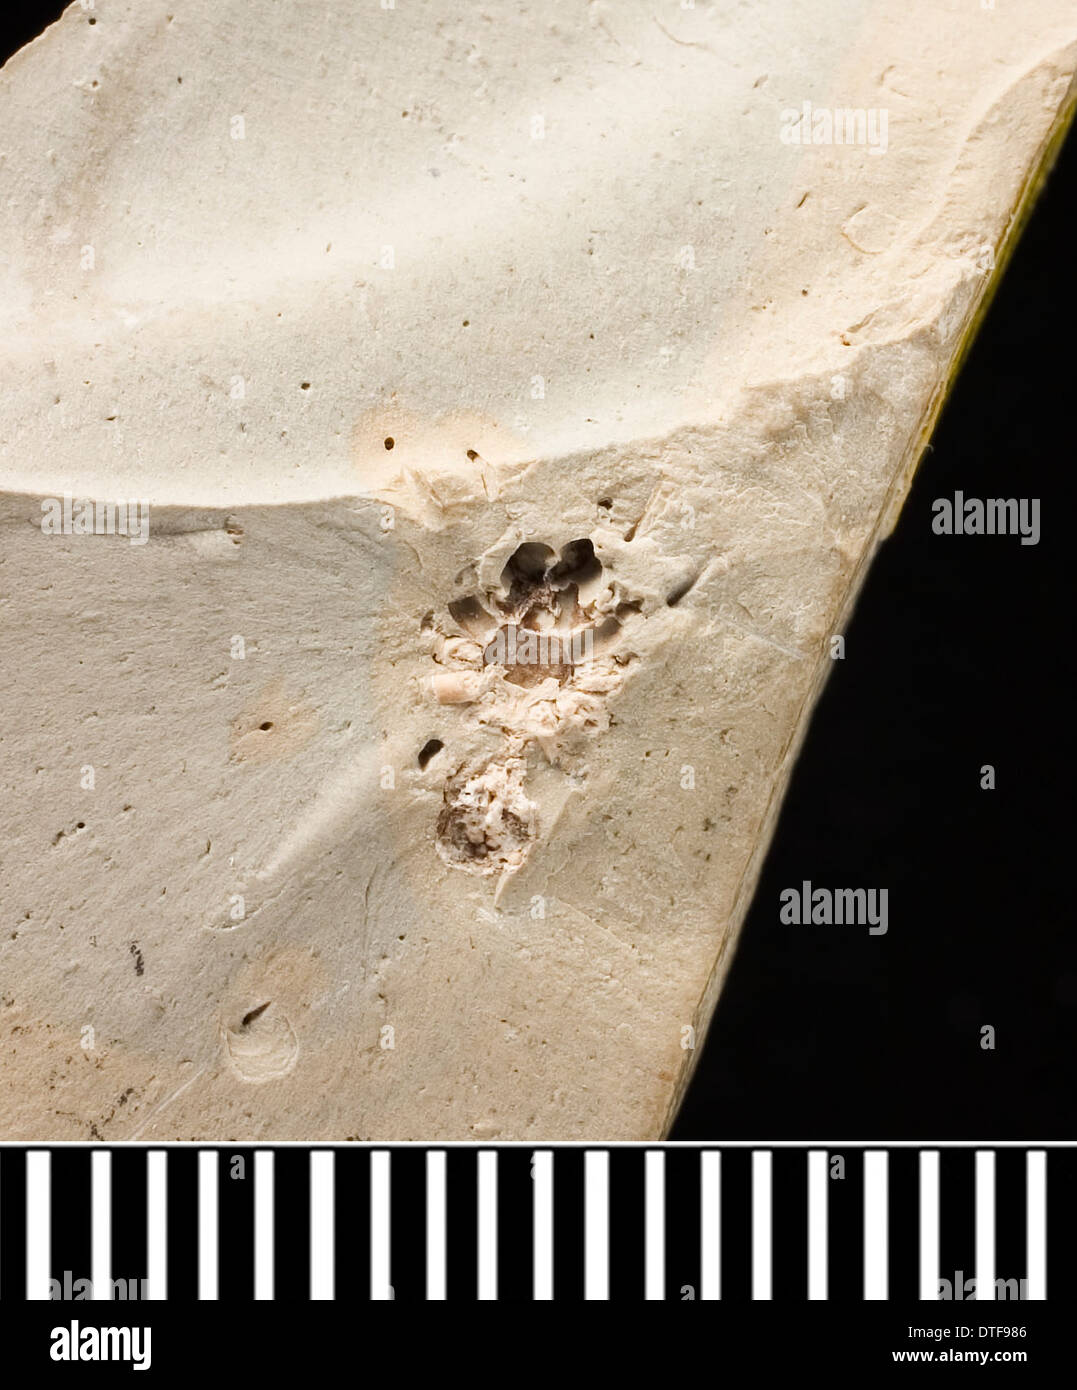 Vectaraneus, a fossil spider Stock Photo